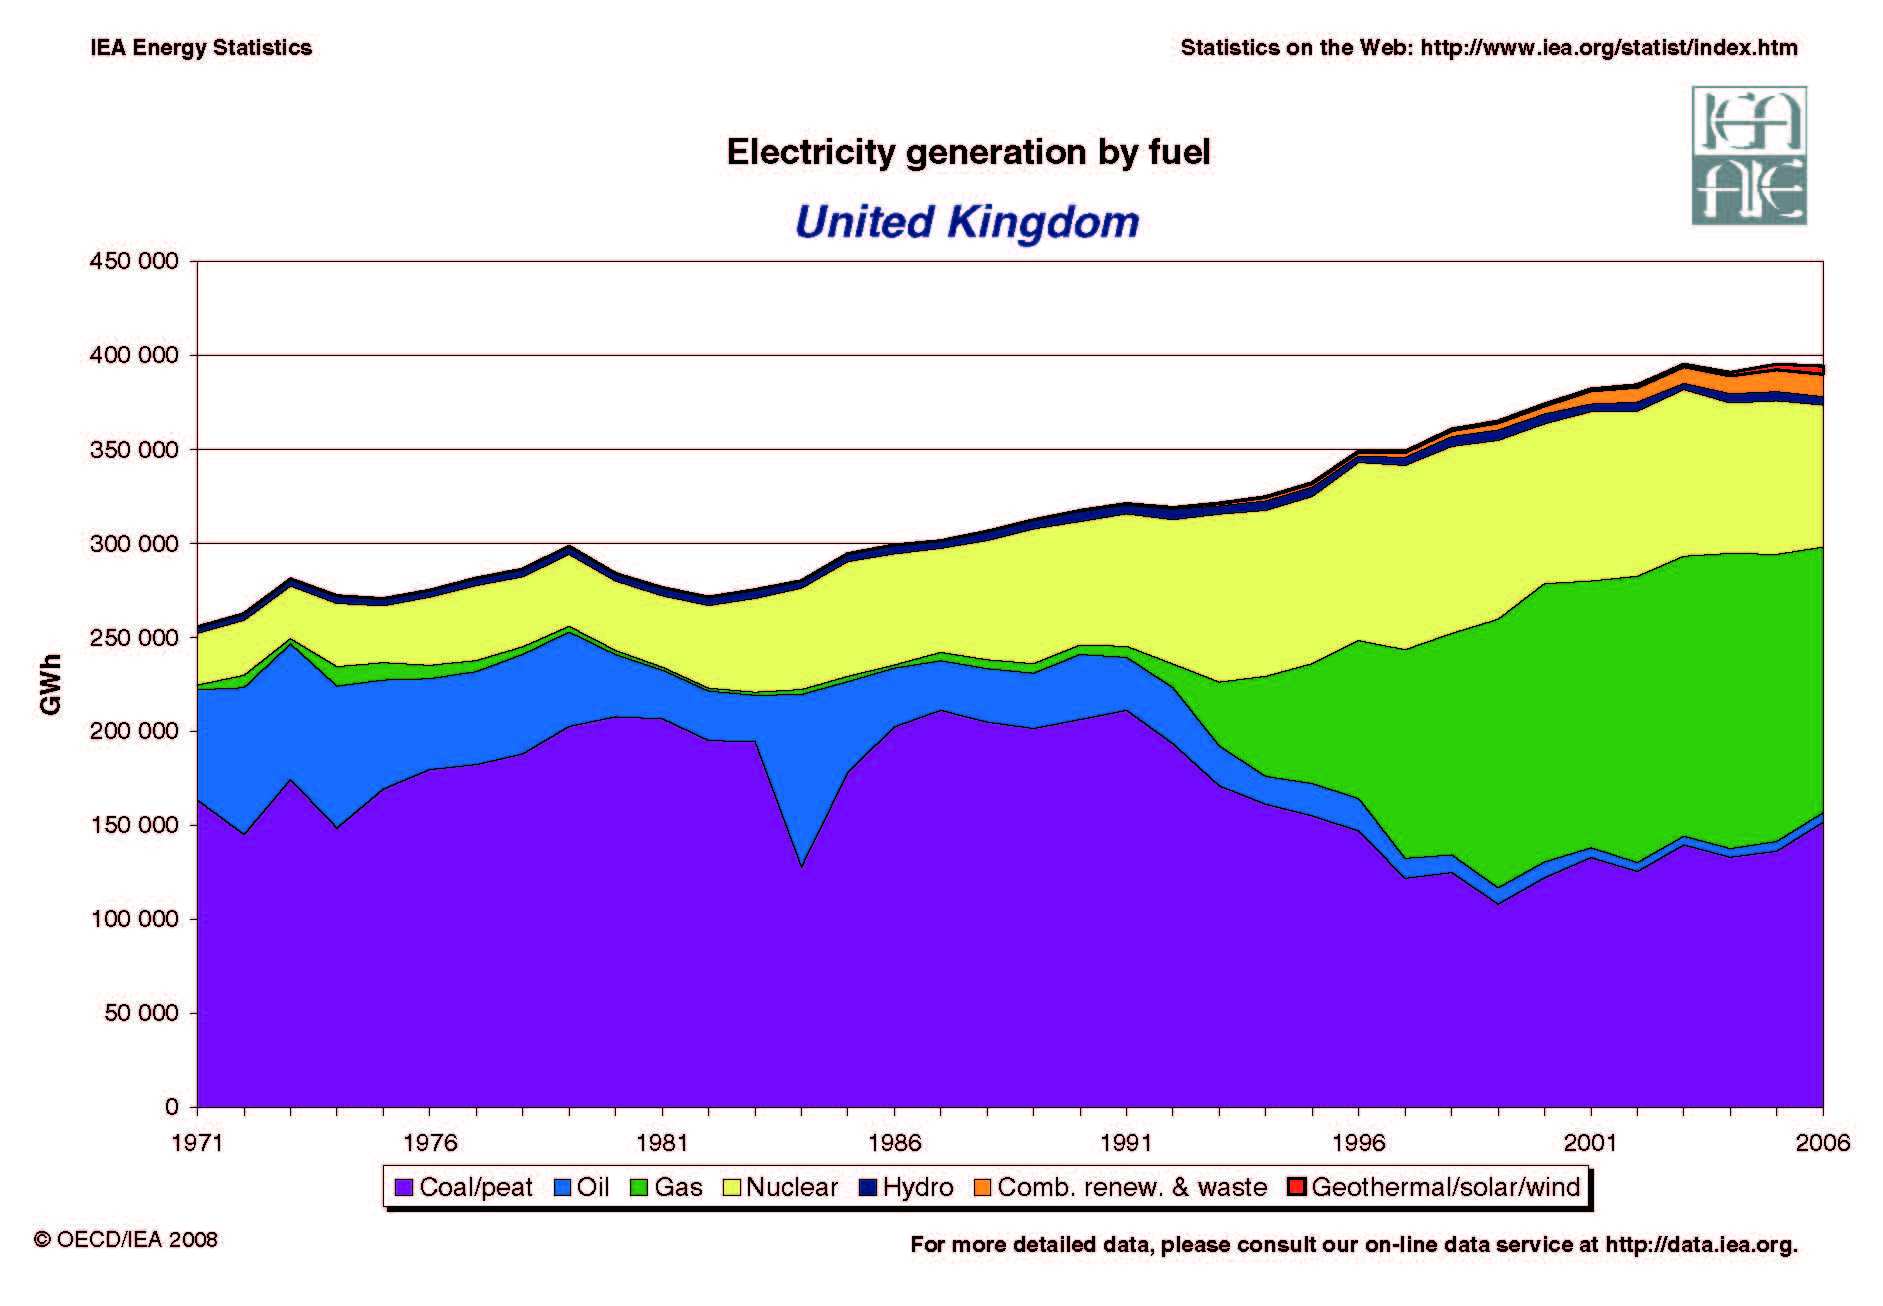 United Kingdom Electricity Generation by Fuel